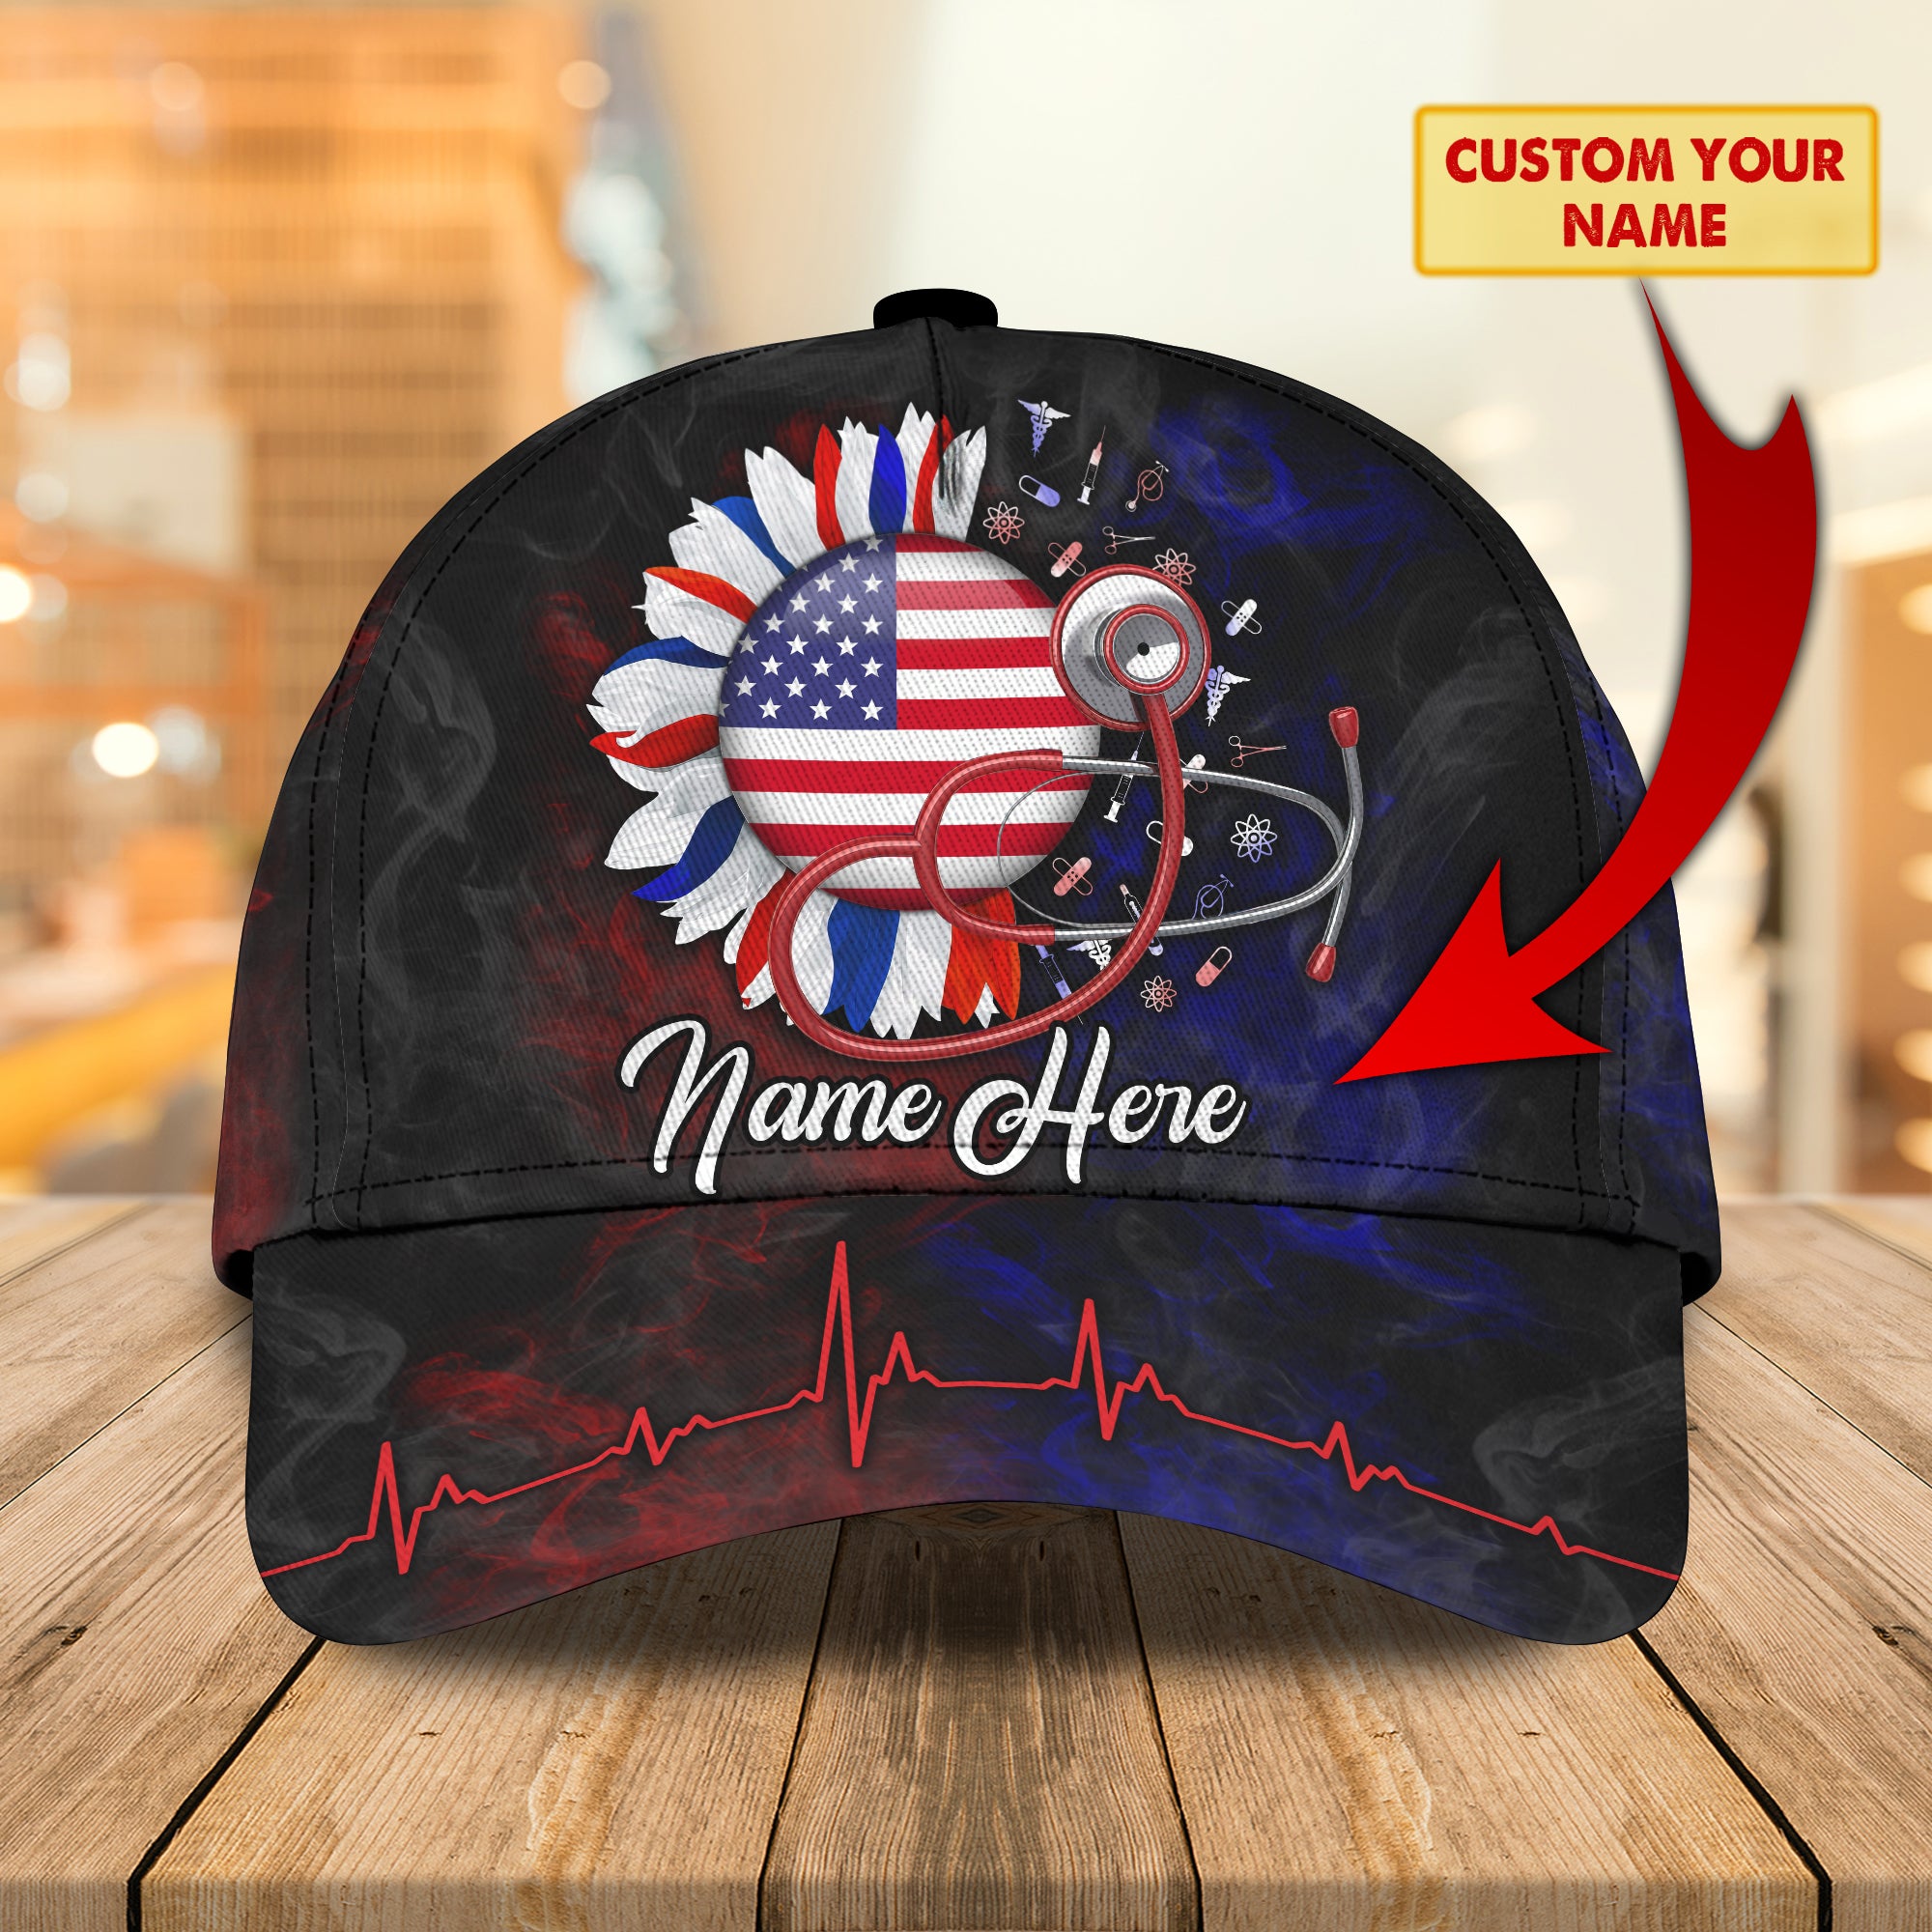 Nusre - Personalized Name Cap